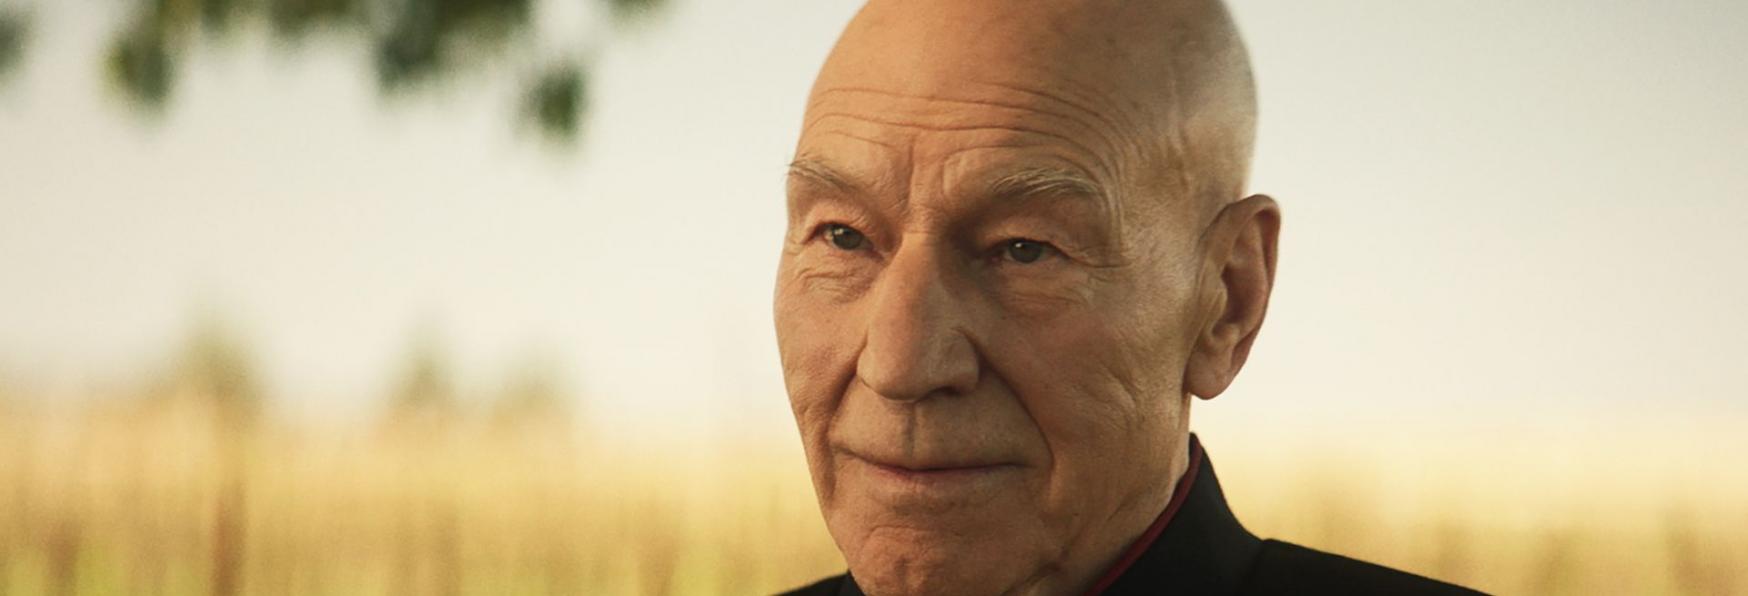 Star Trek: Picard 3 sarà Collegata a Deep Space Nine e Voyager